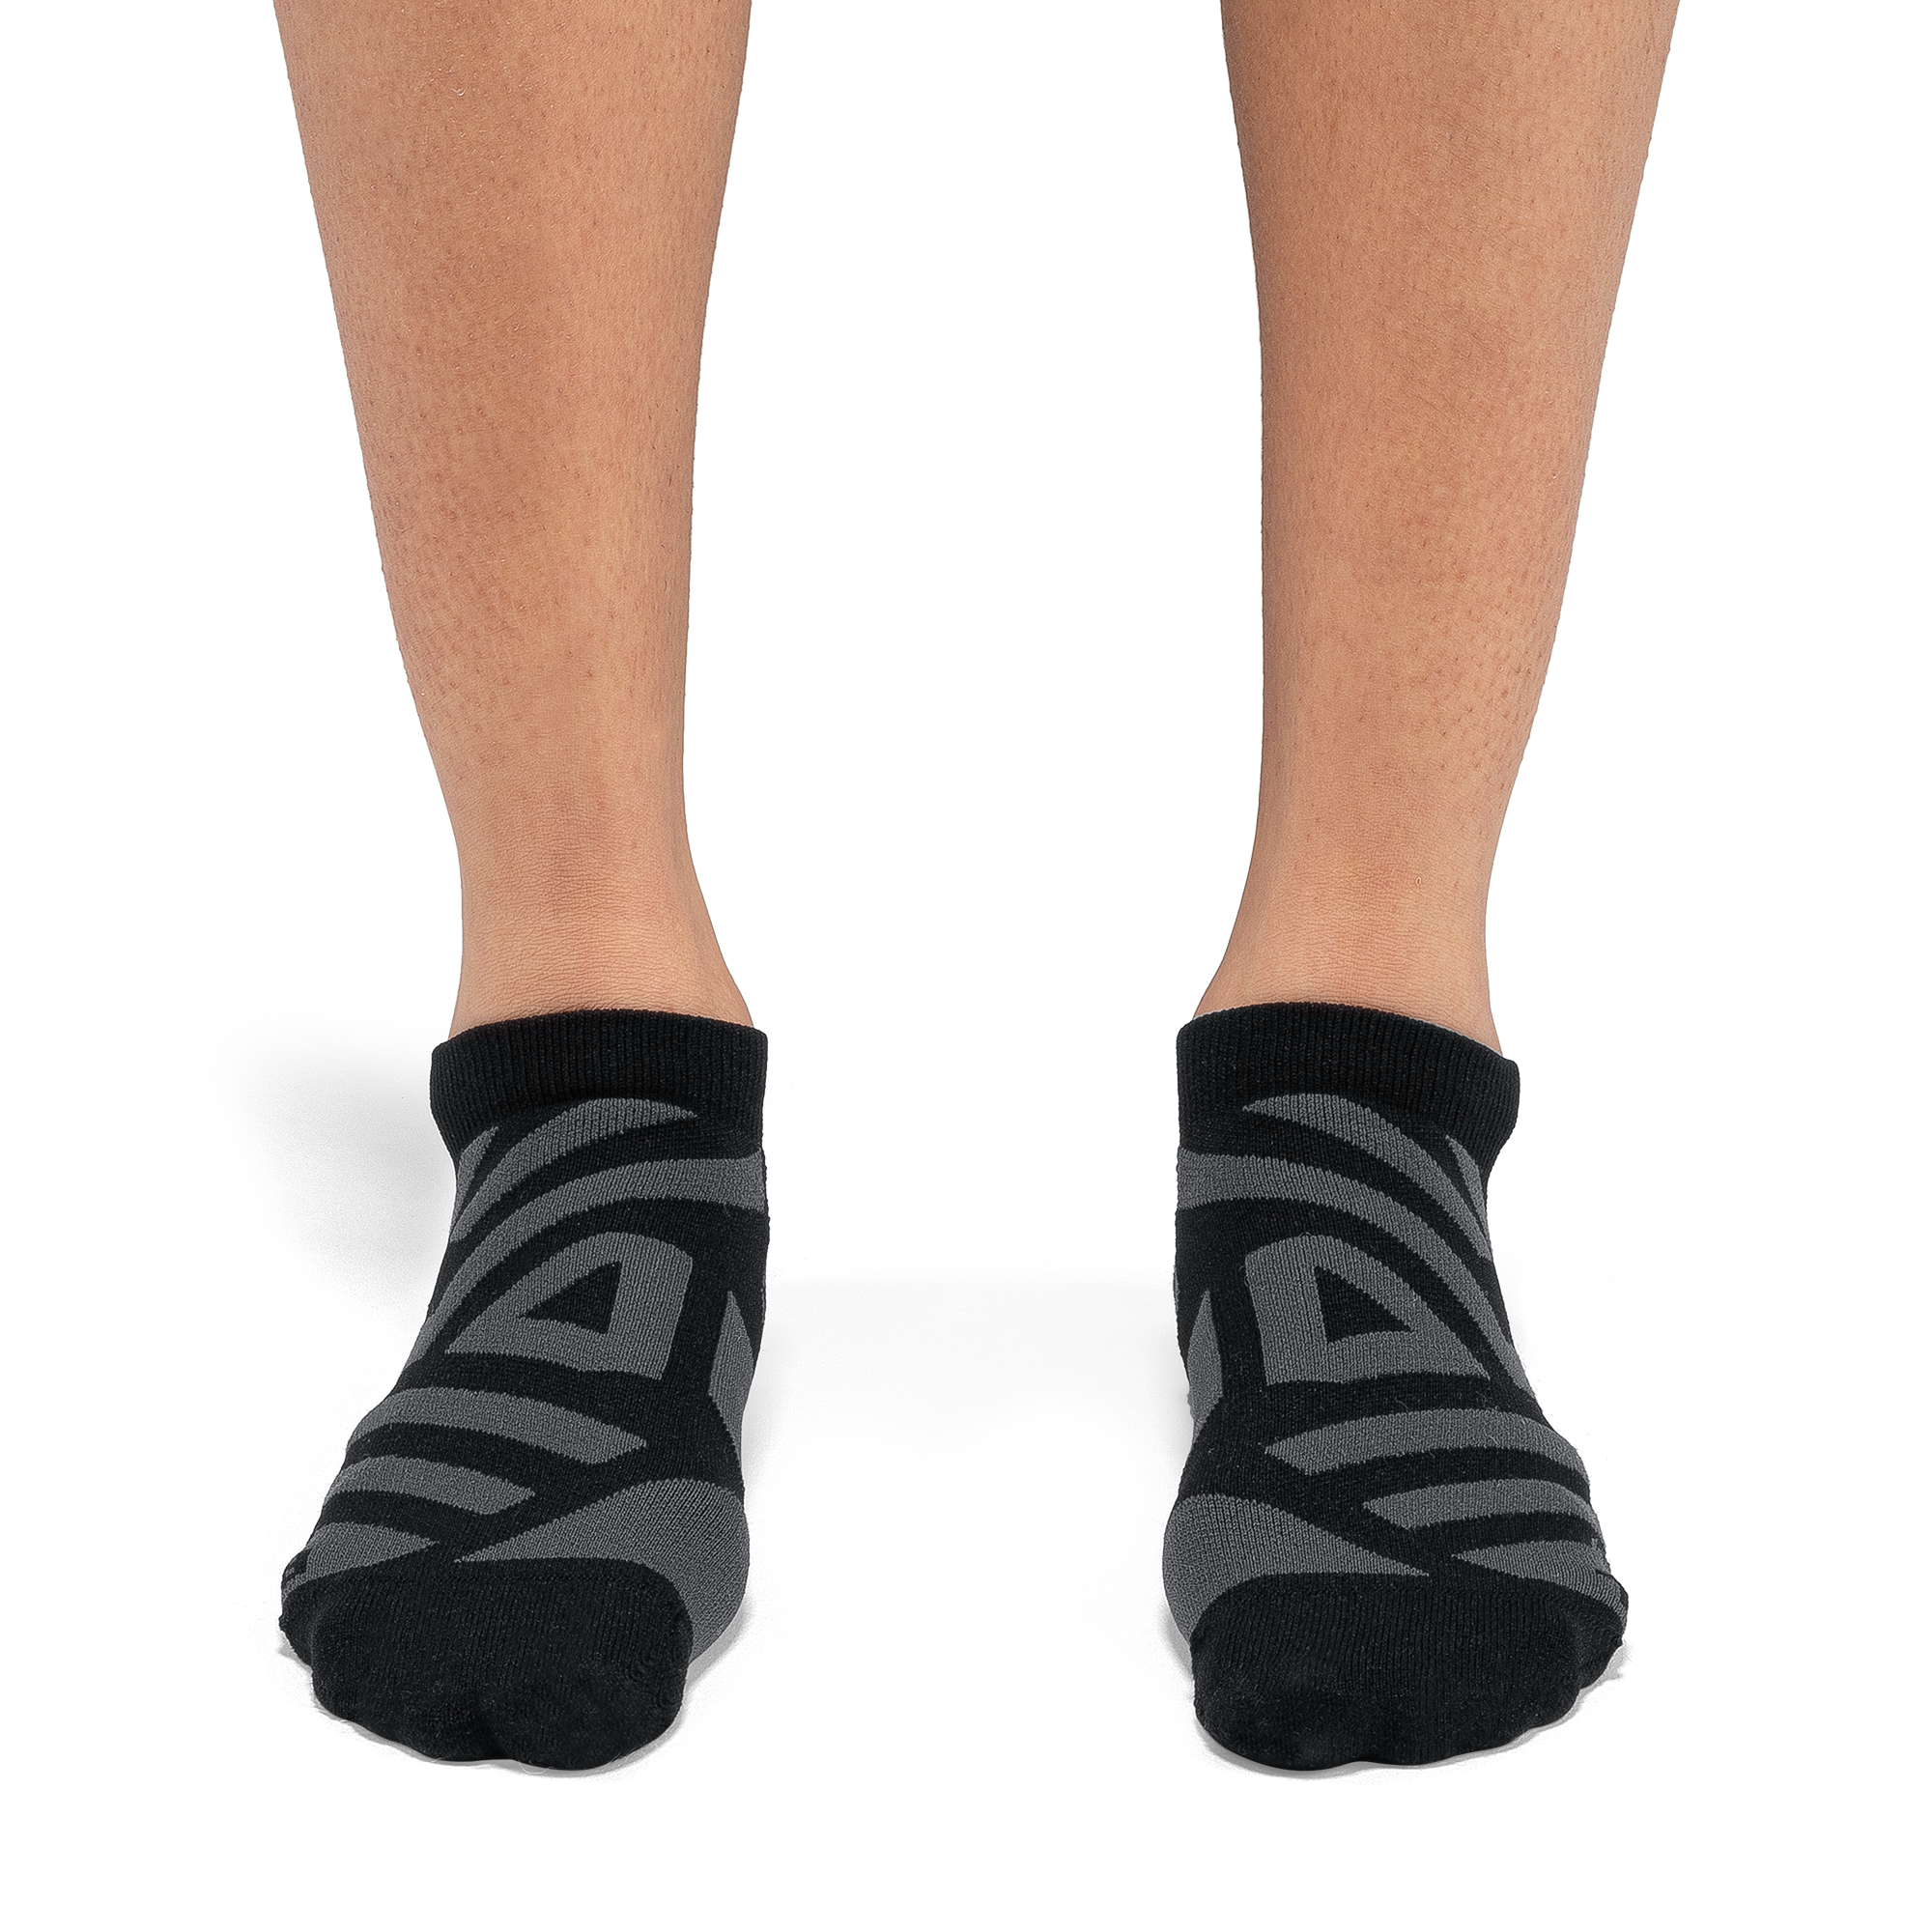 Low Sock black  Socks - Sportwerk